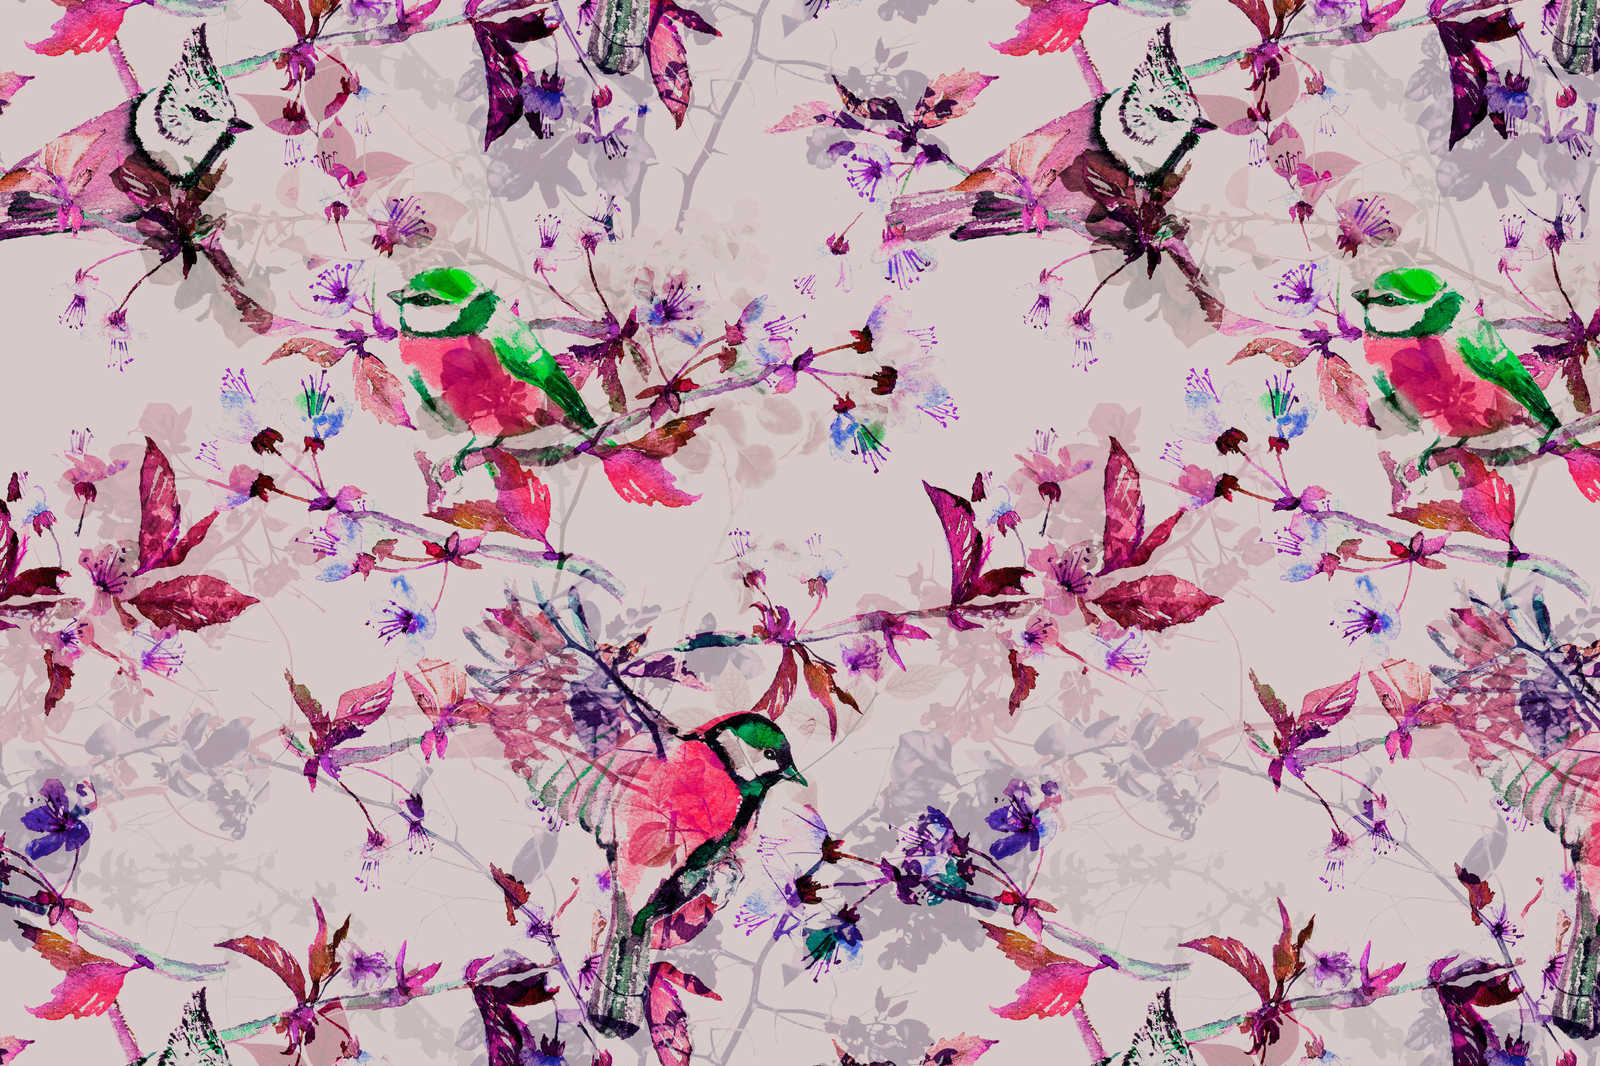             Pájaros Pintura sobre lienzo estilo collage | rosa, azul - 0,90 m x 0,60 m
        